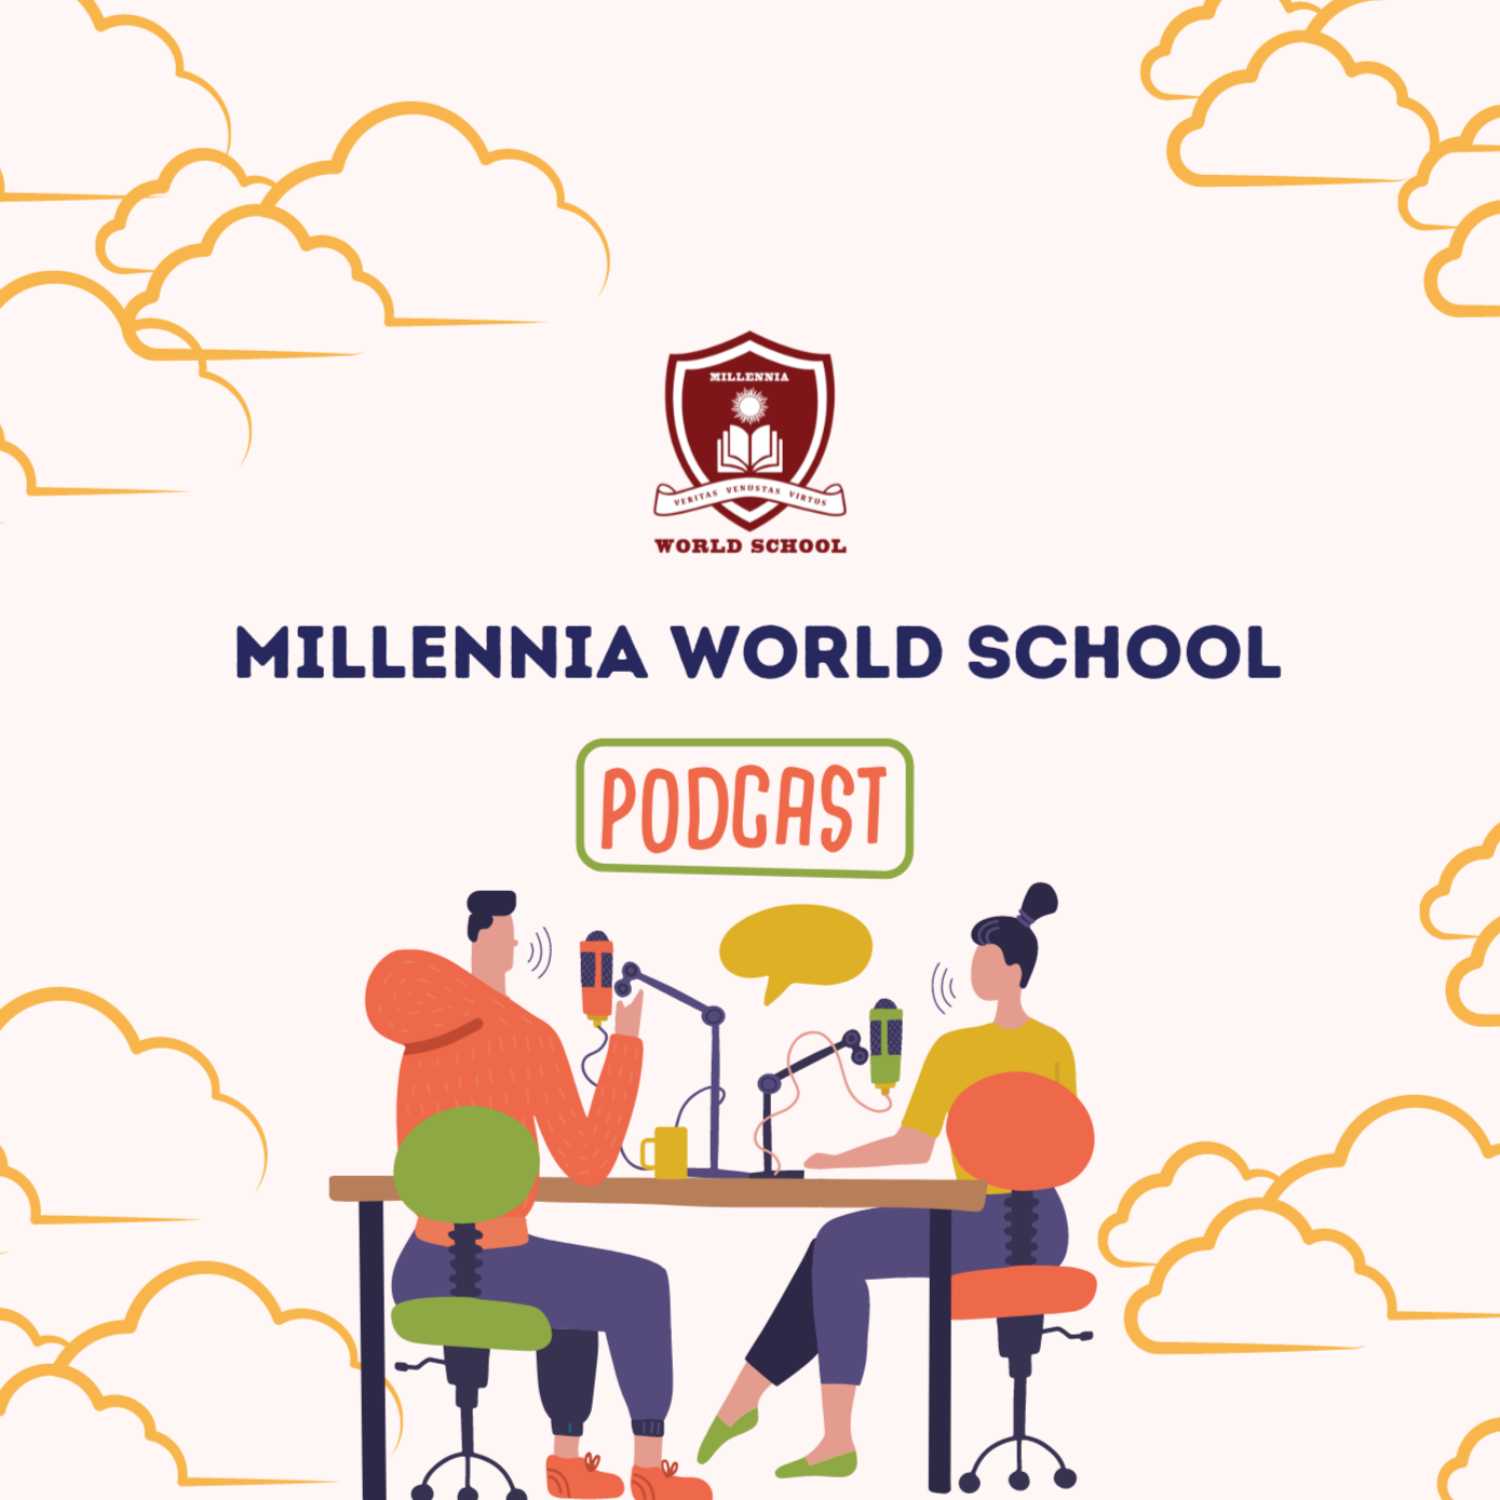 Millennia World School - Podcast